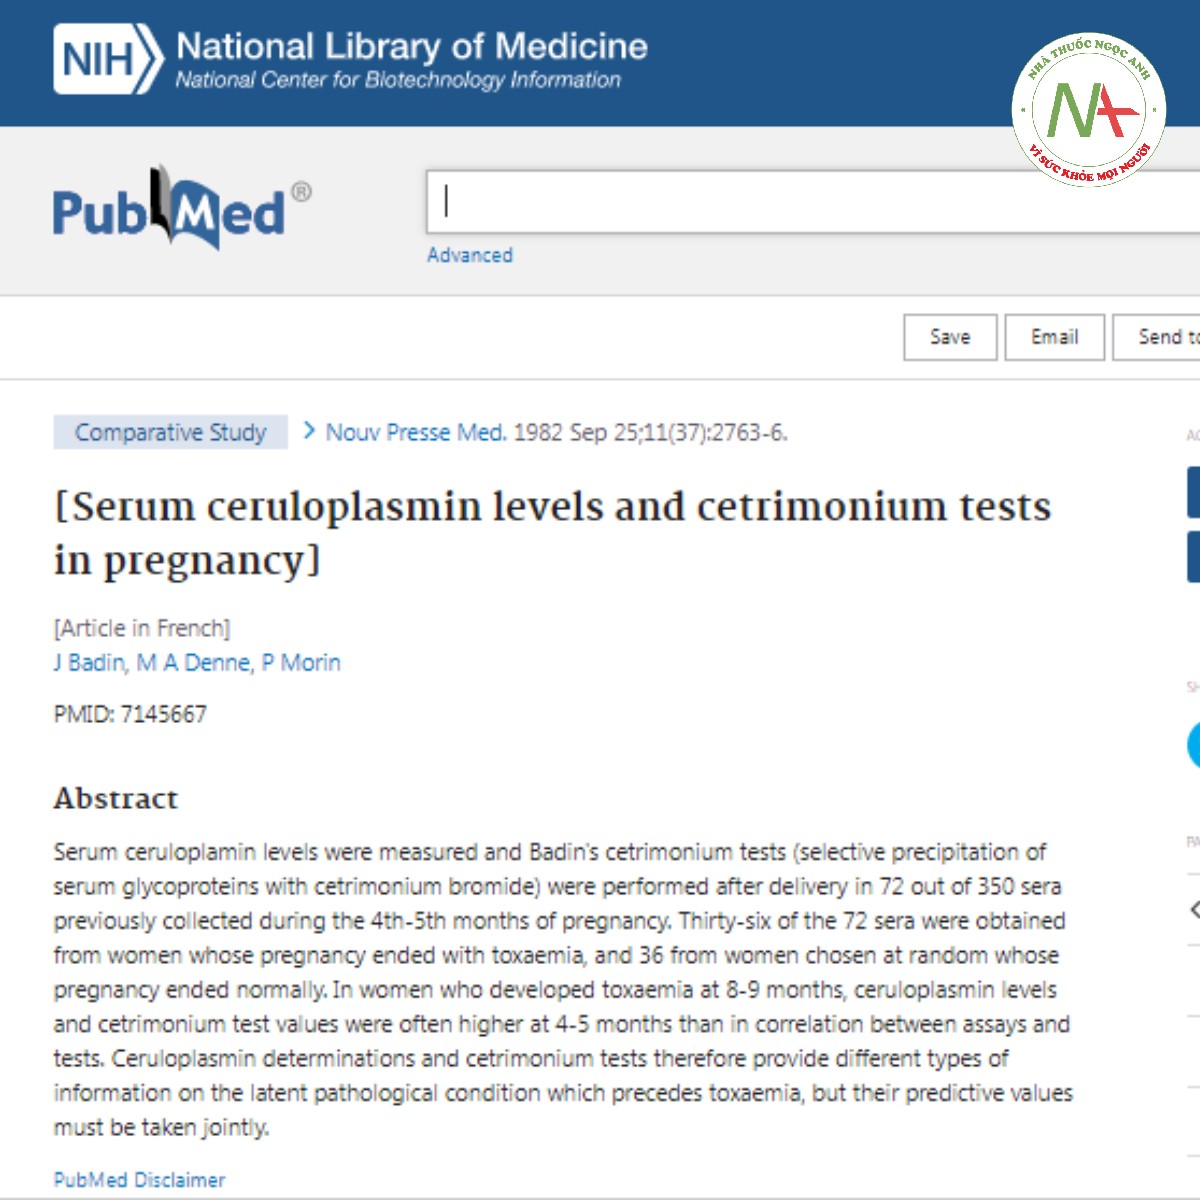 Serum ceruloplasmin levels and cetrimonium tests in pregnancy